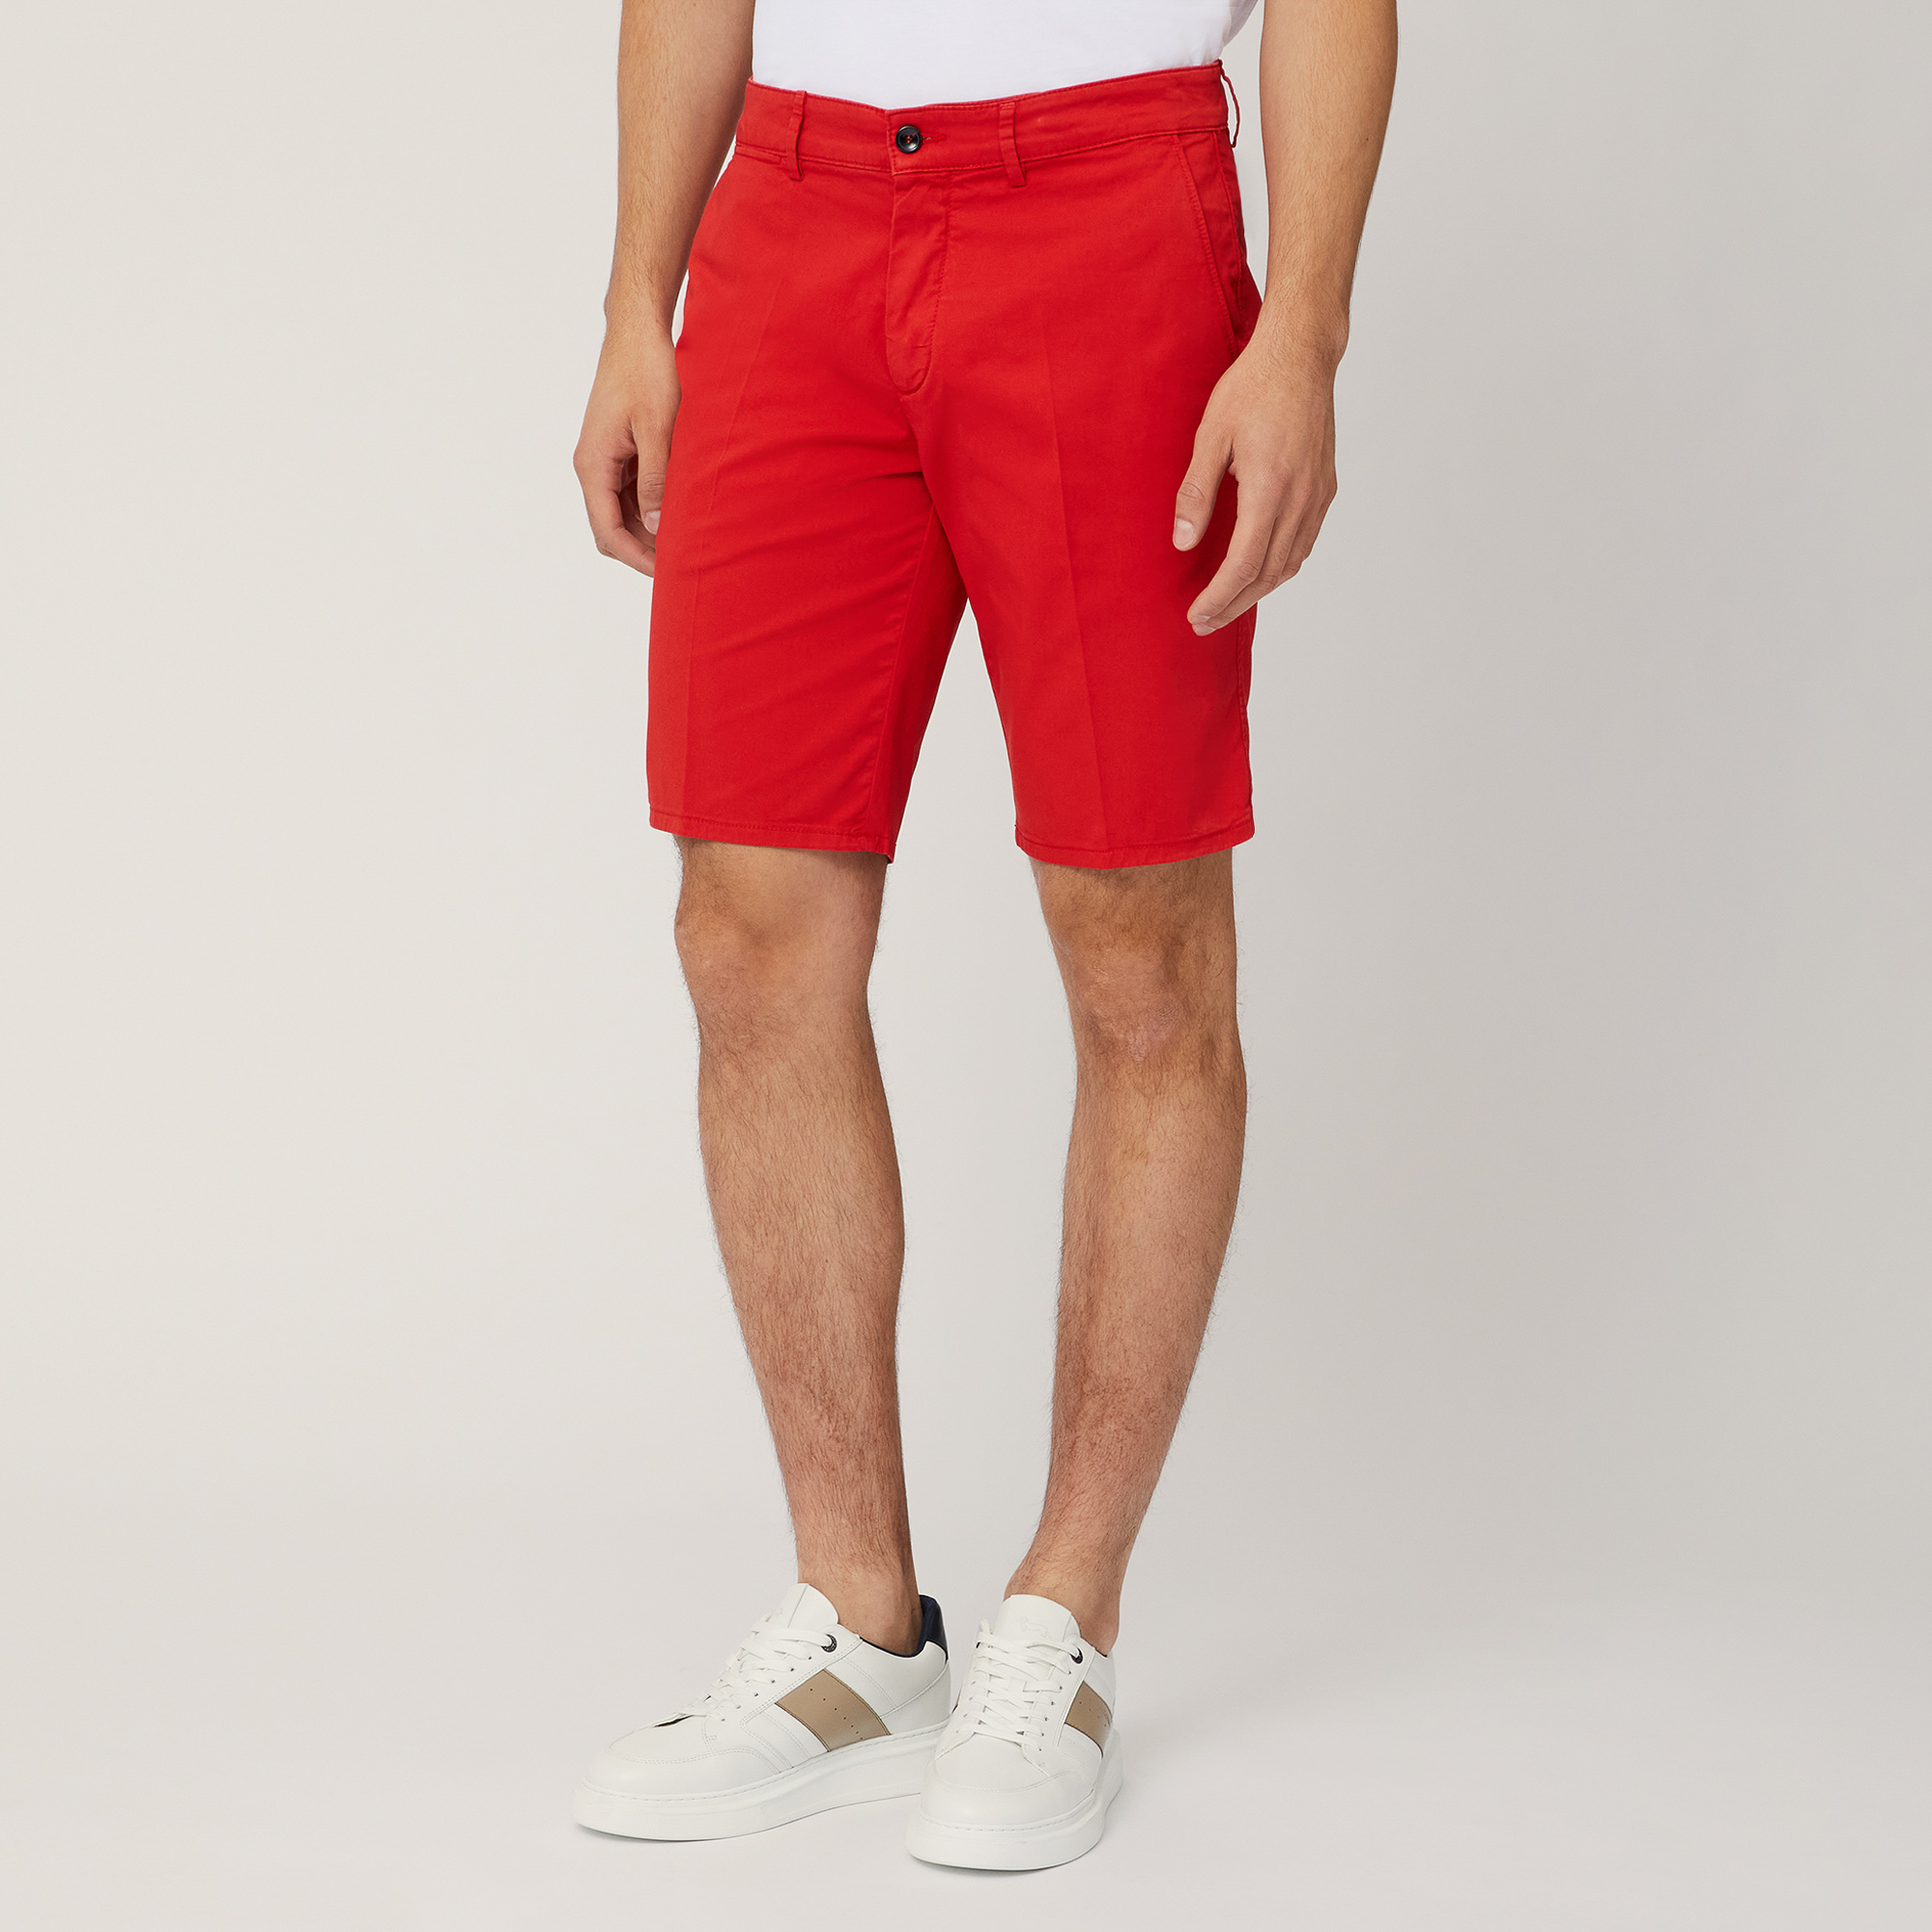 Regular Fit Bermuda Shorts, Light Red, large